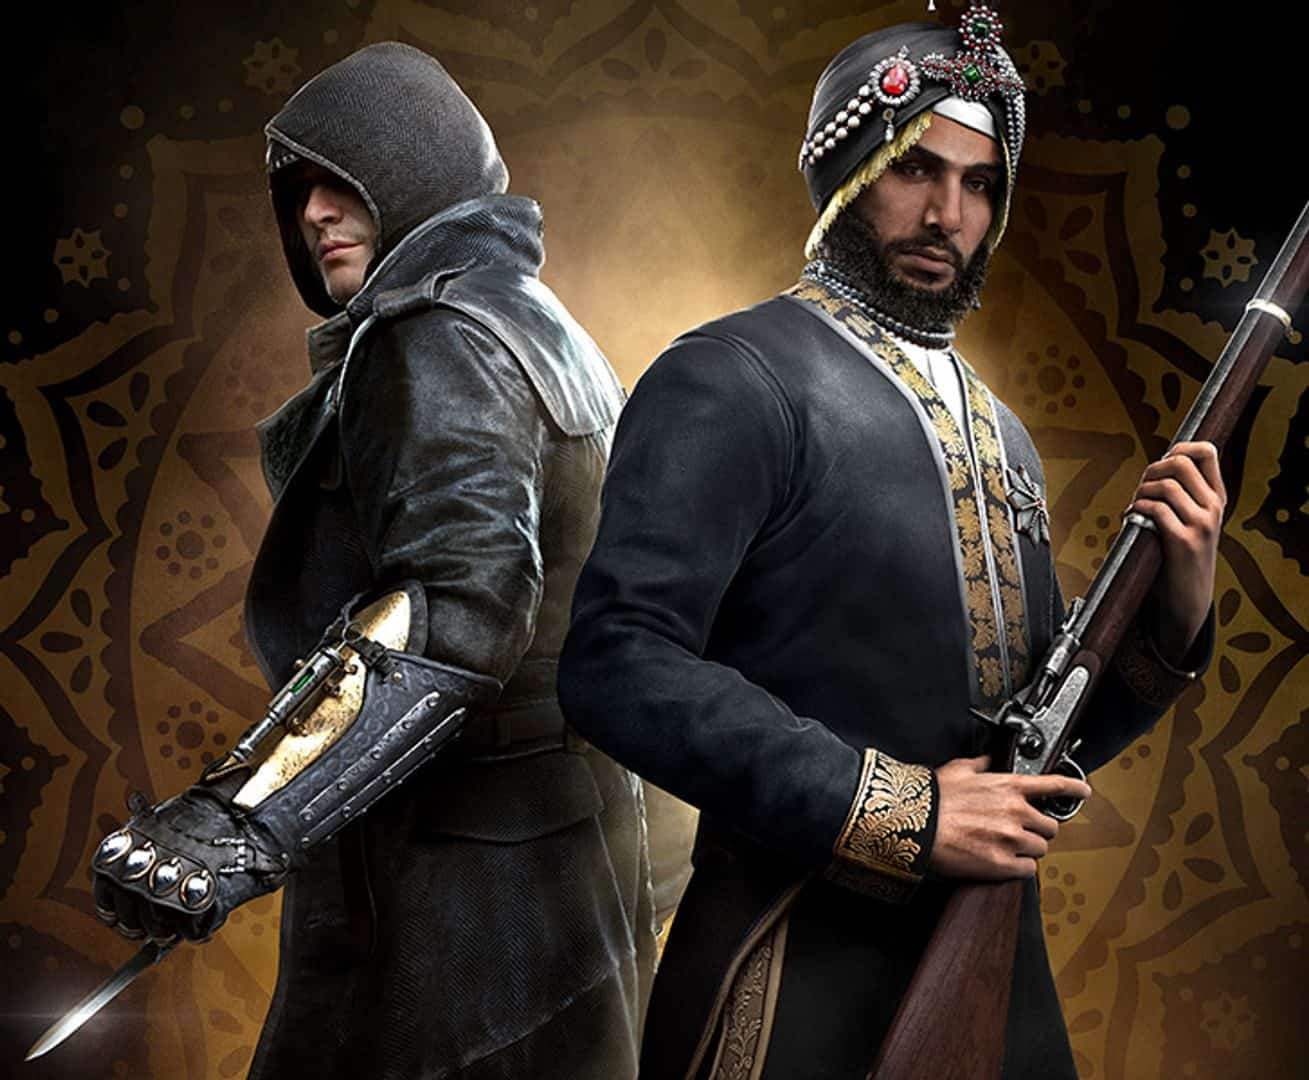 Assassin's Creed: Syndicate - The Last Maharaja